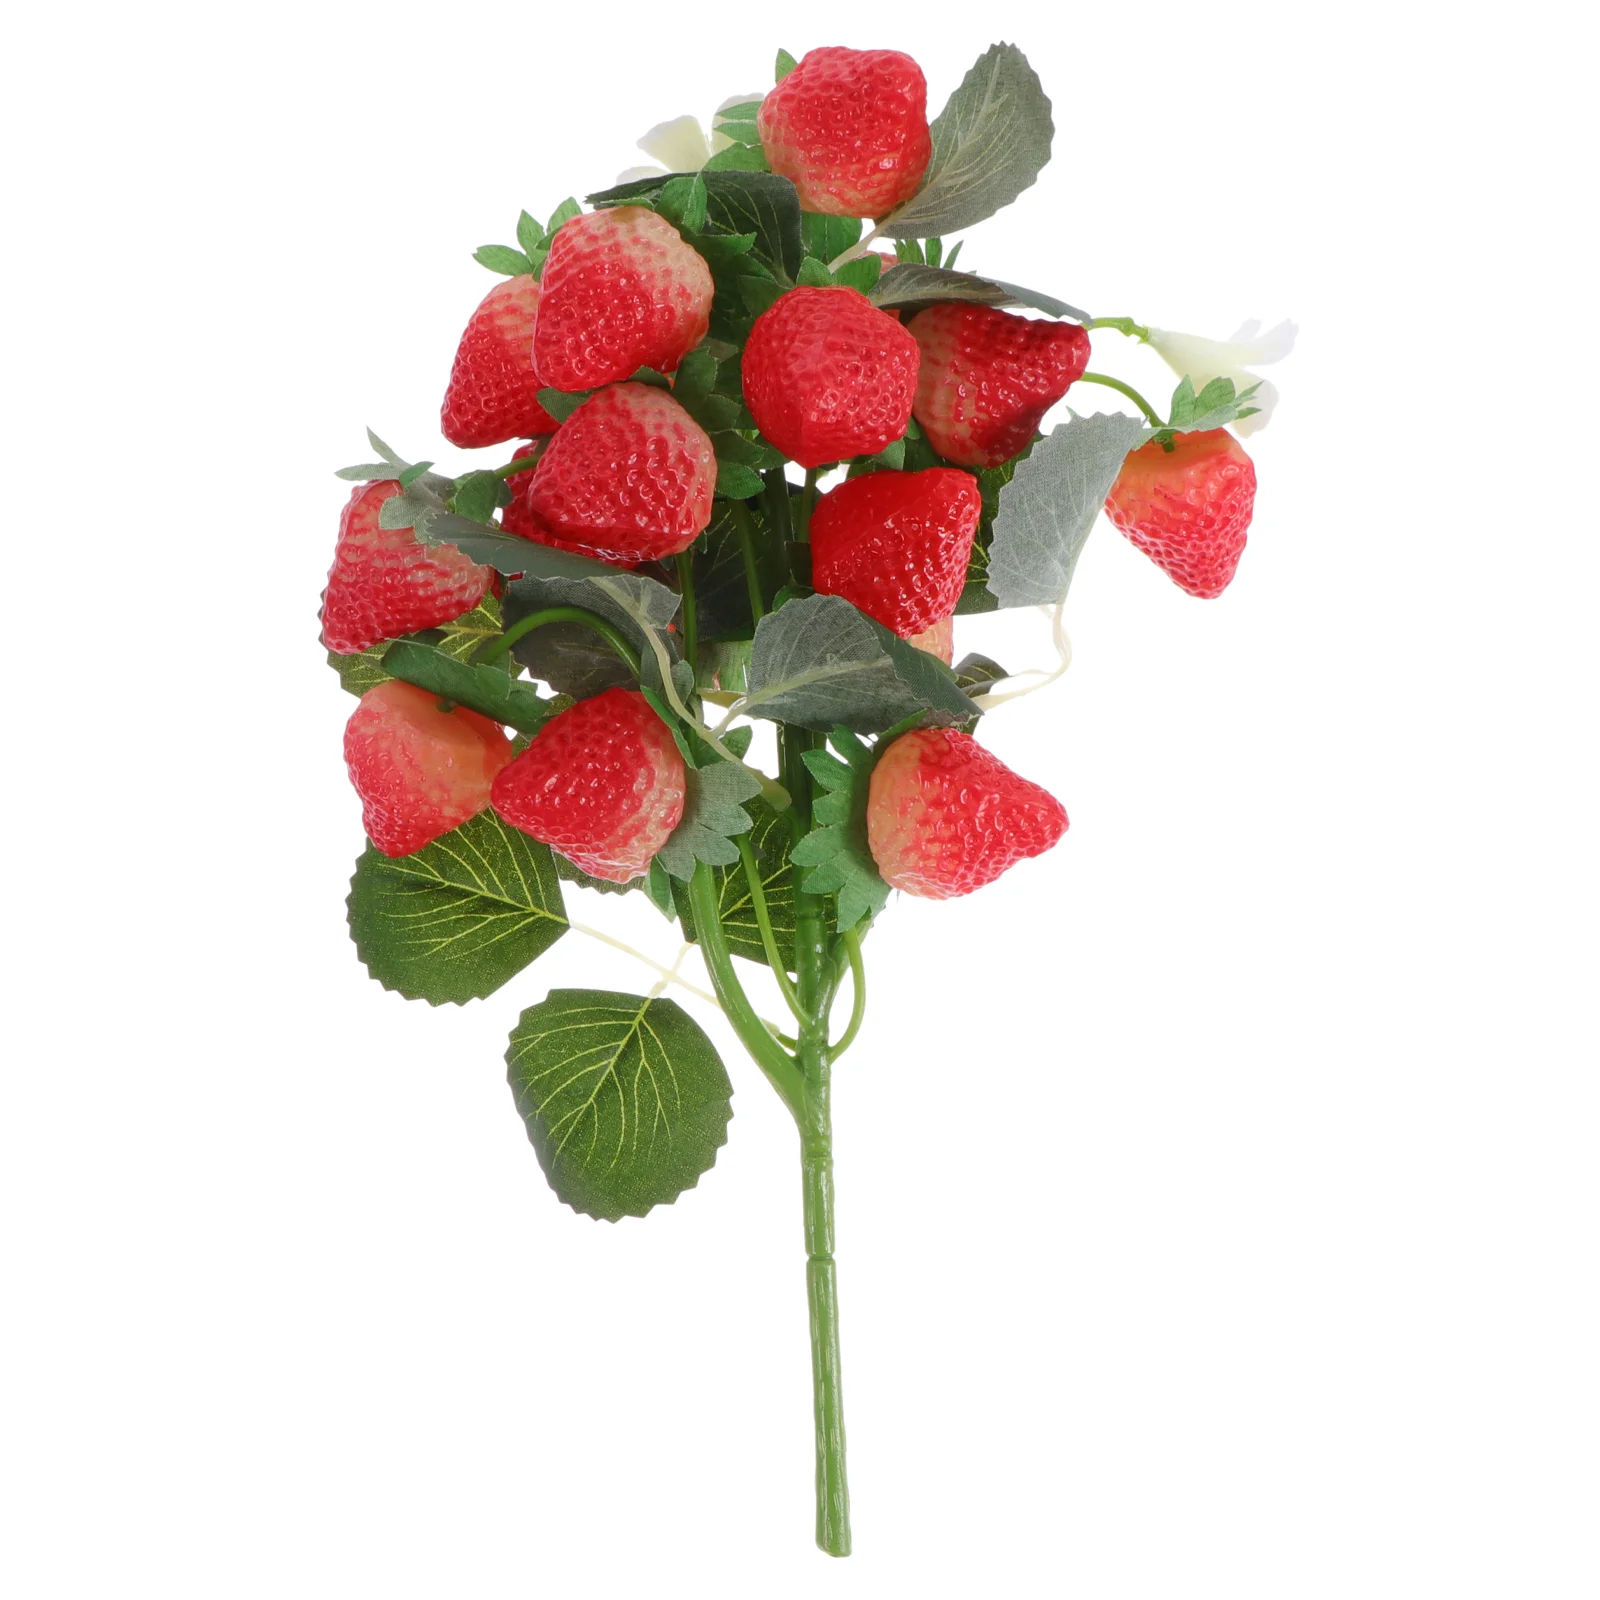 

Strawberry Artificial Fake Strawberries Fruit Decor Faux Flower Branch Bouquet Picks Decorations Branches Party Lifelike Stem